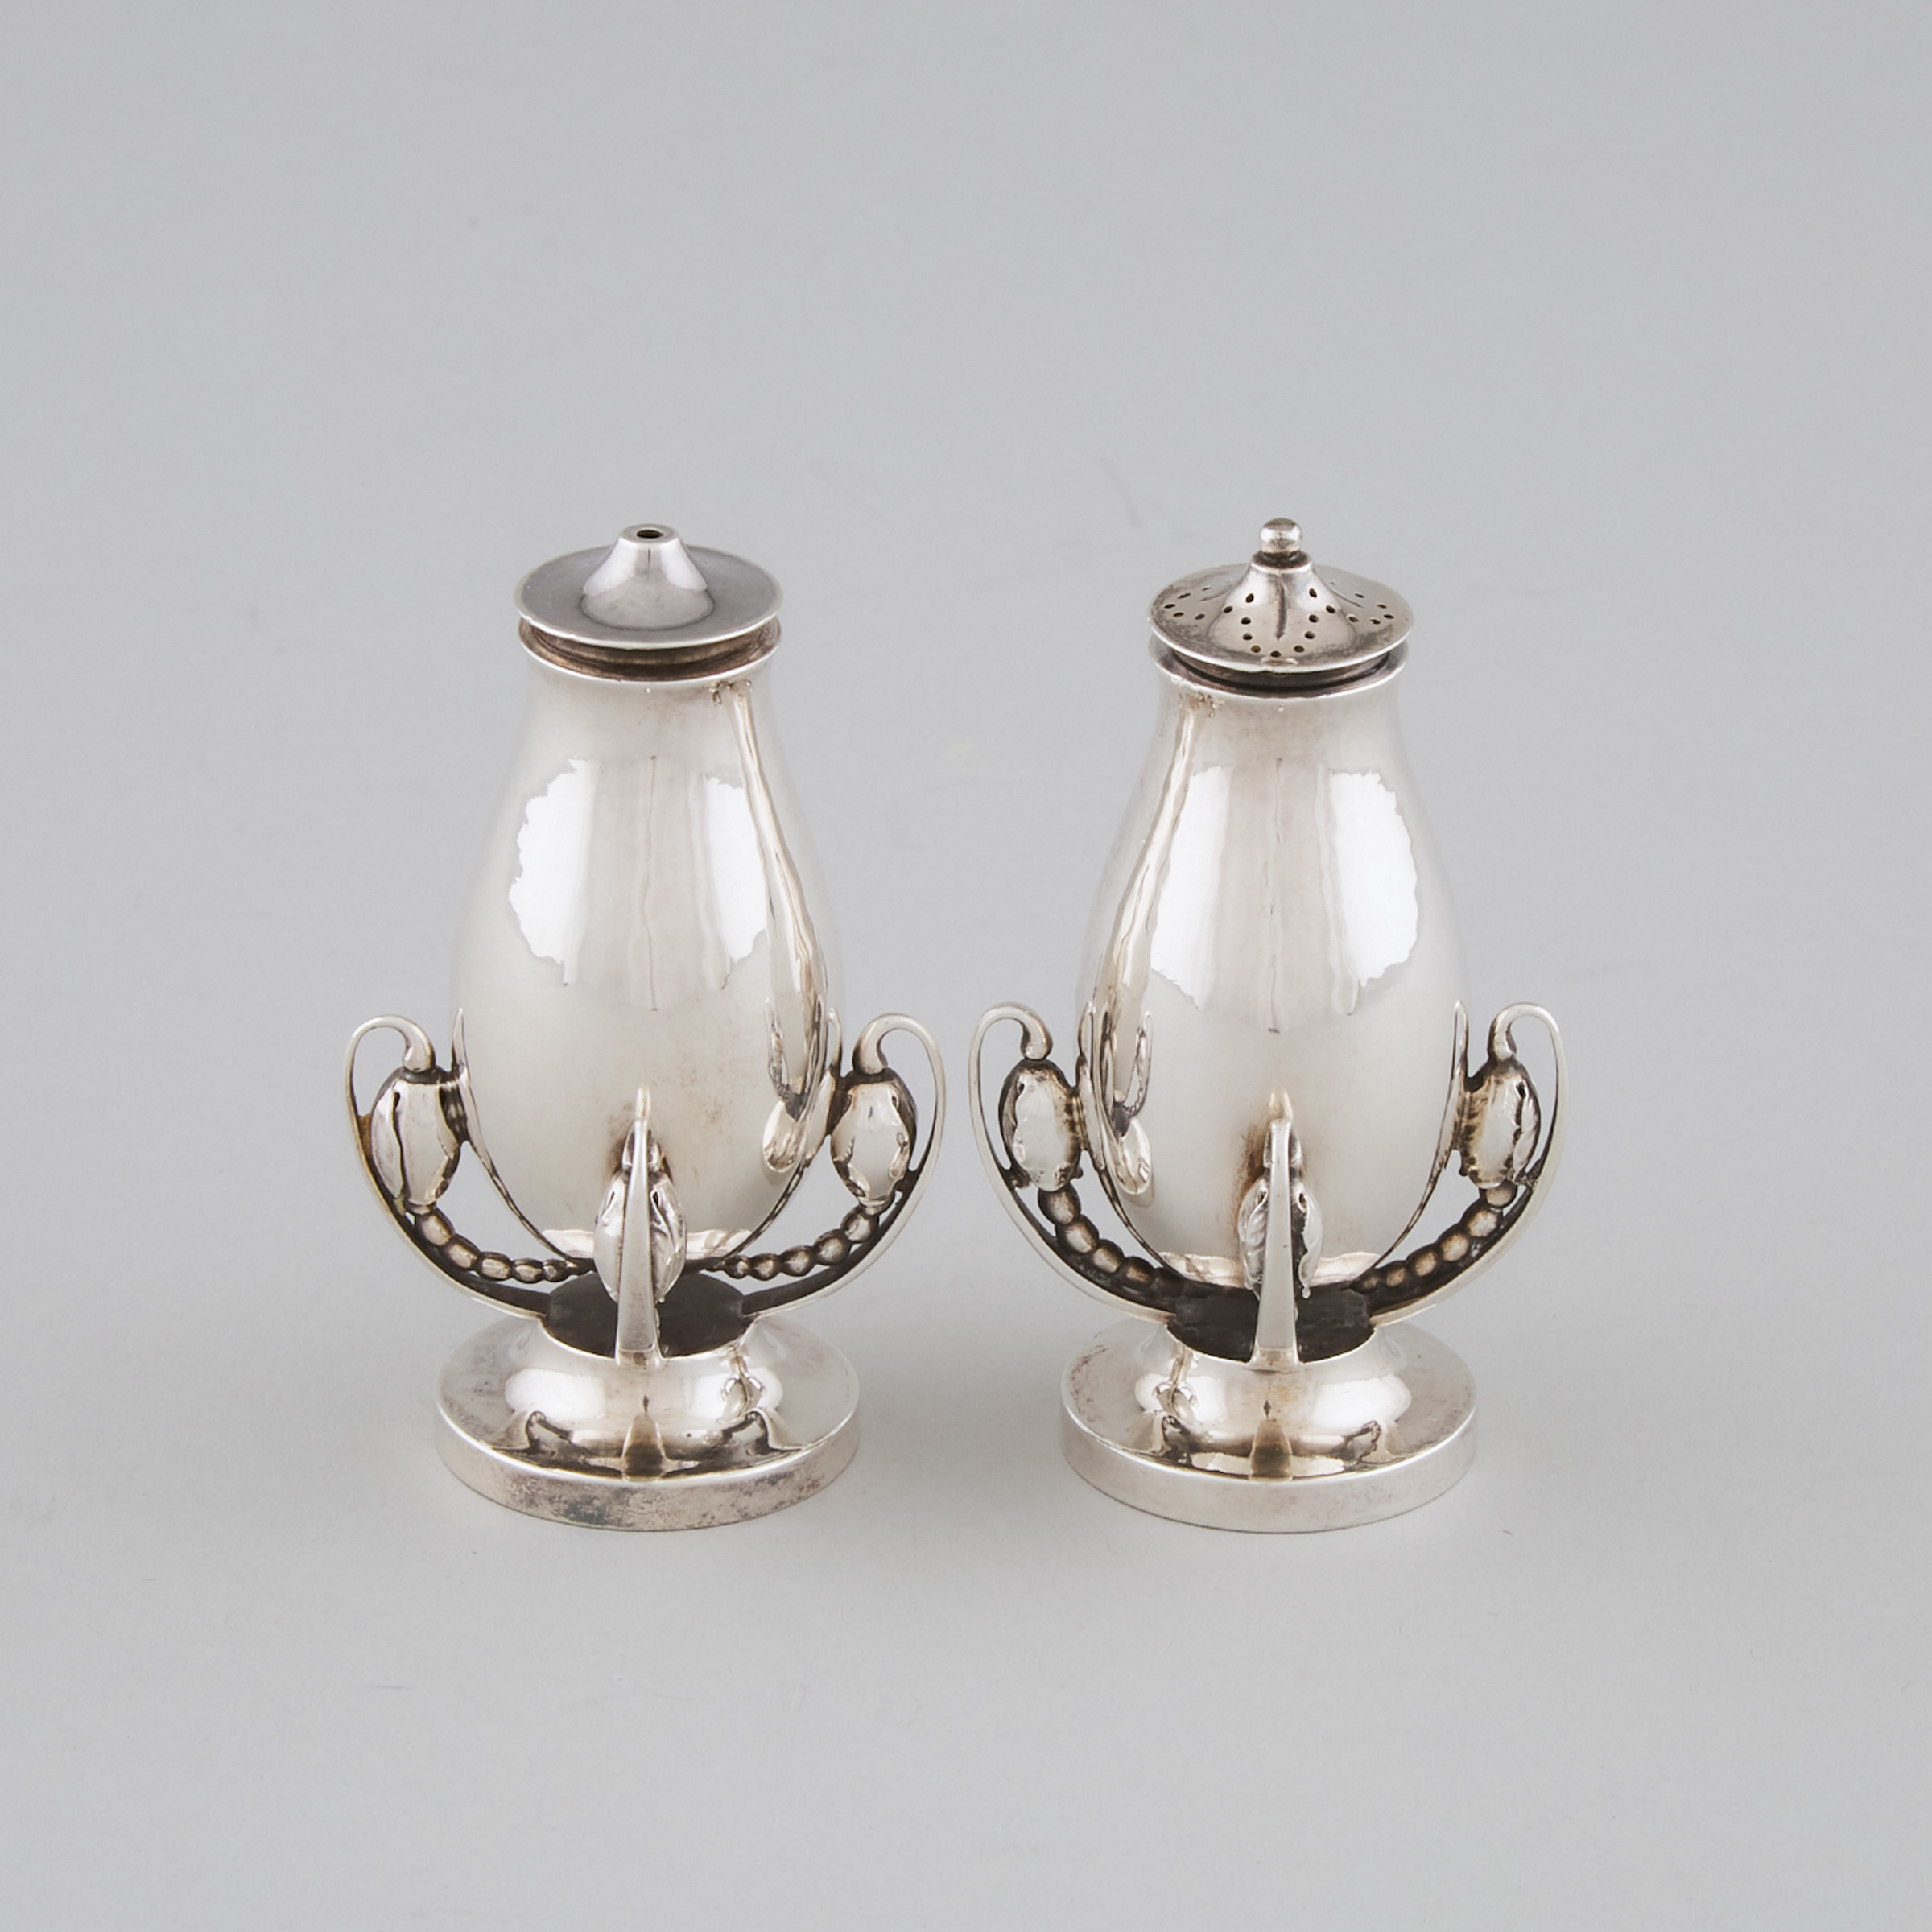 Pair of Danish Silver 'Blossom' Pattern Salt and Pepper Casters, #2B, Georg Jensen, Copenhagen, post-1945